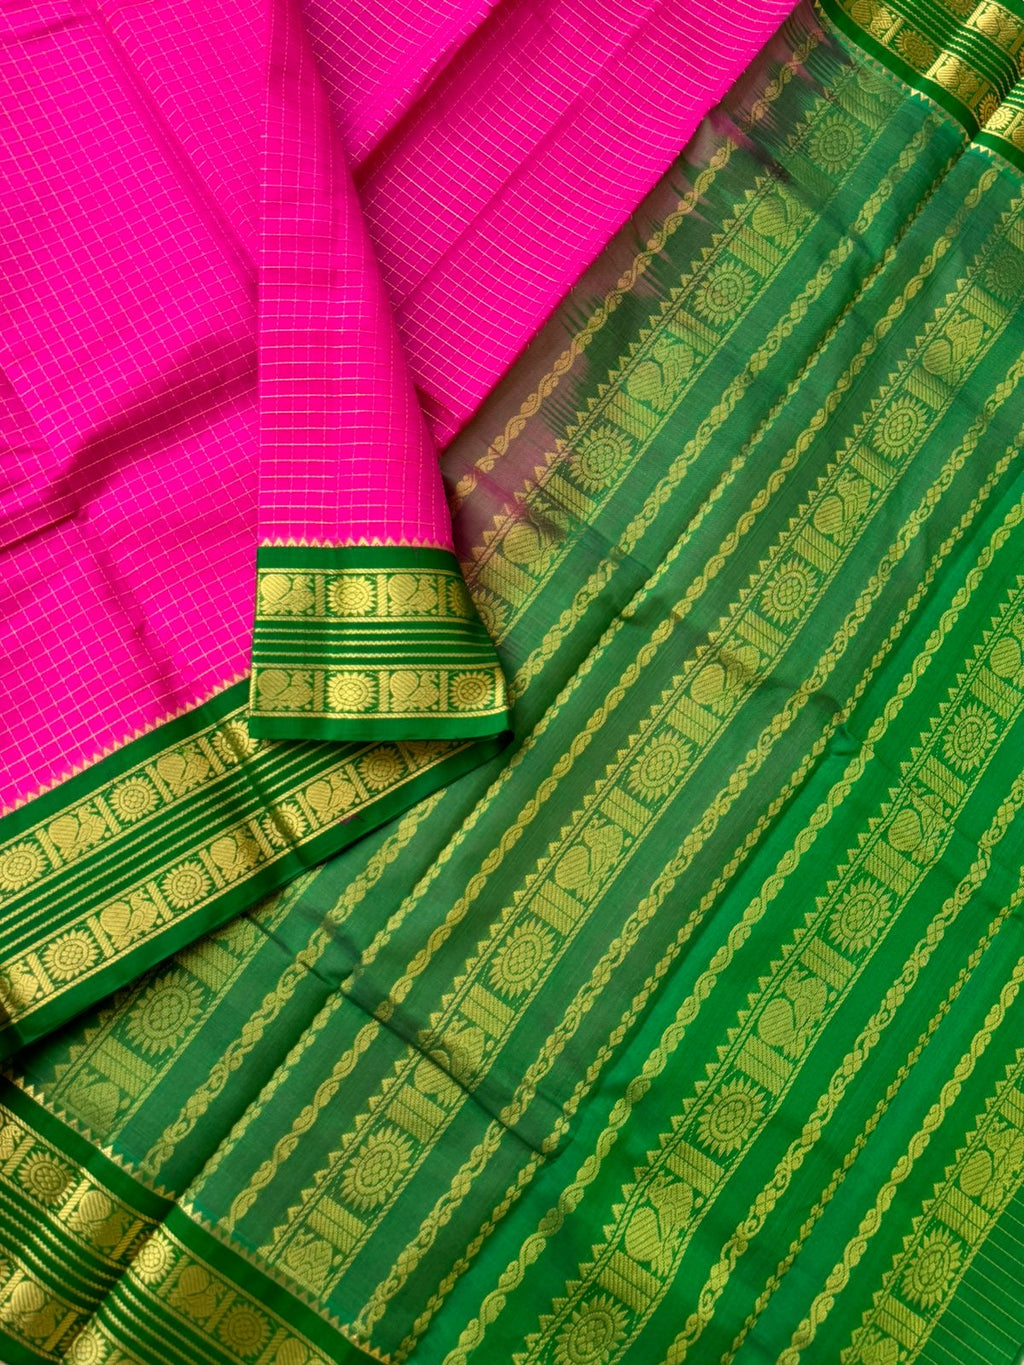 Kattams on Korvai Silk Cotton - pink and green